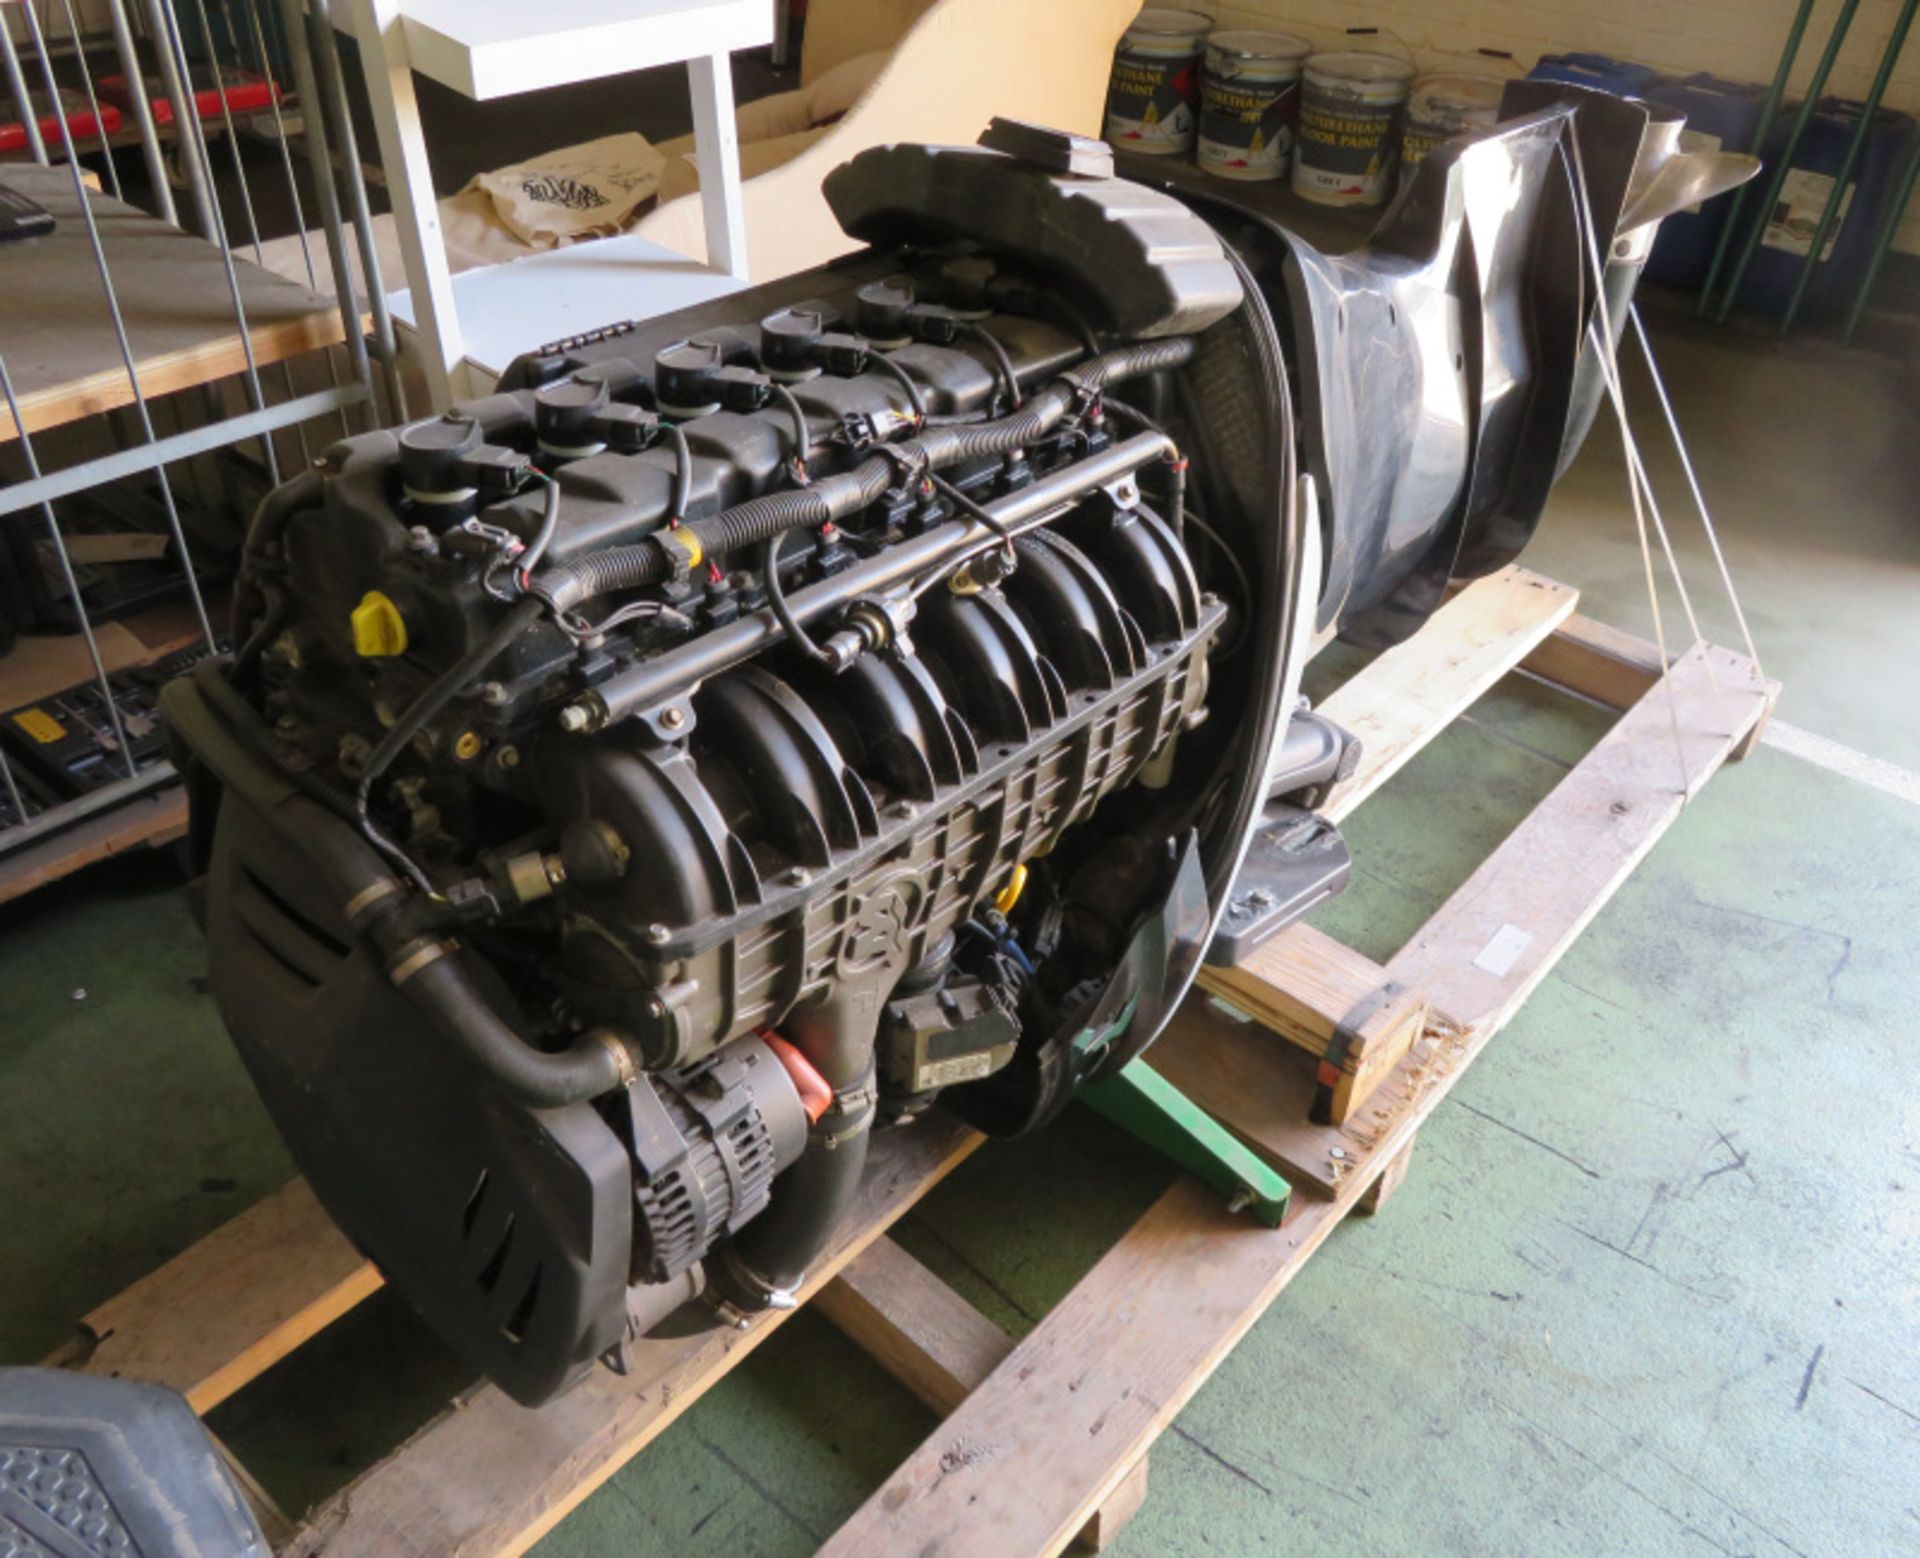 Verado 300XL L6 outboard engine - model 1300V23ED - serial 1B767606 - HP 300 - kW 221 - 679lbs/308kg - Image 5 of 9